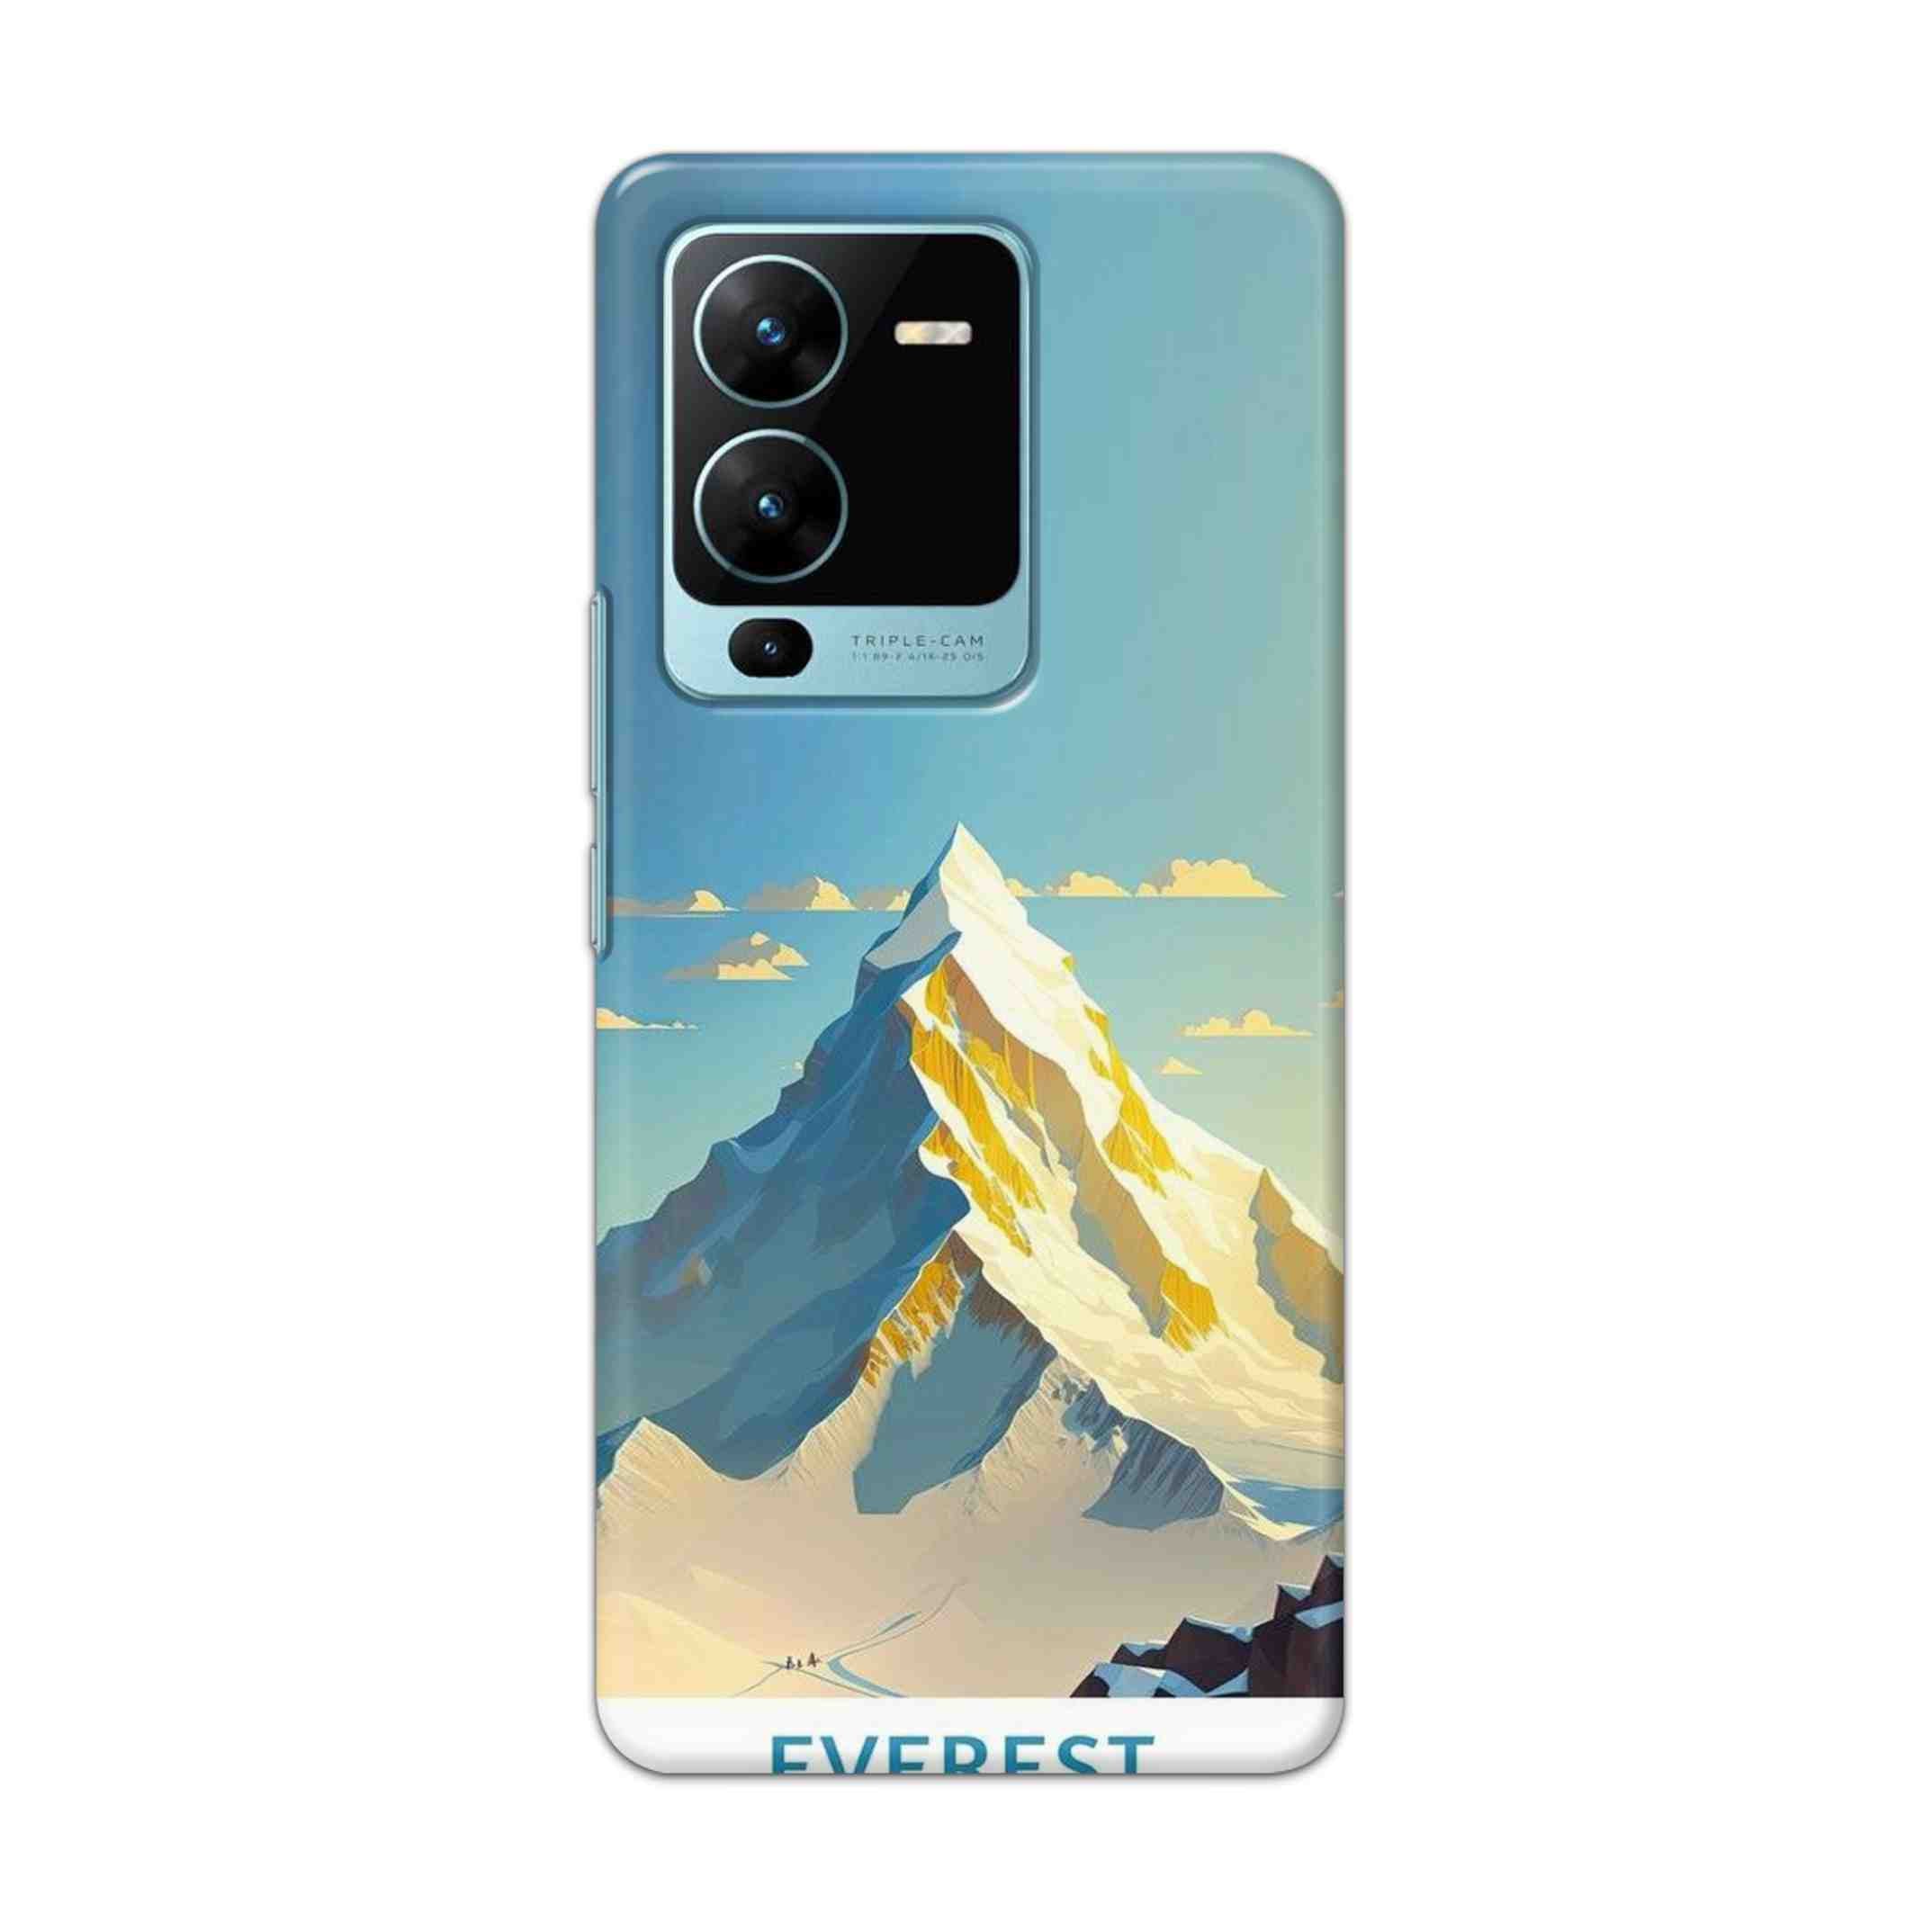 Buy Everest Hard Back Mobile Phone Case Cover For Vivo V25 Pro Online